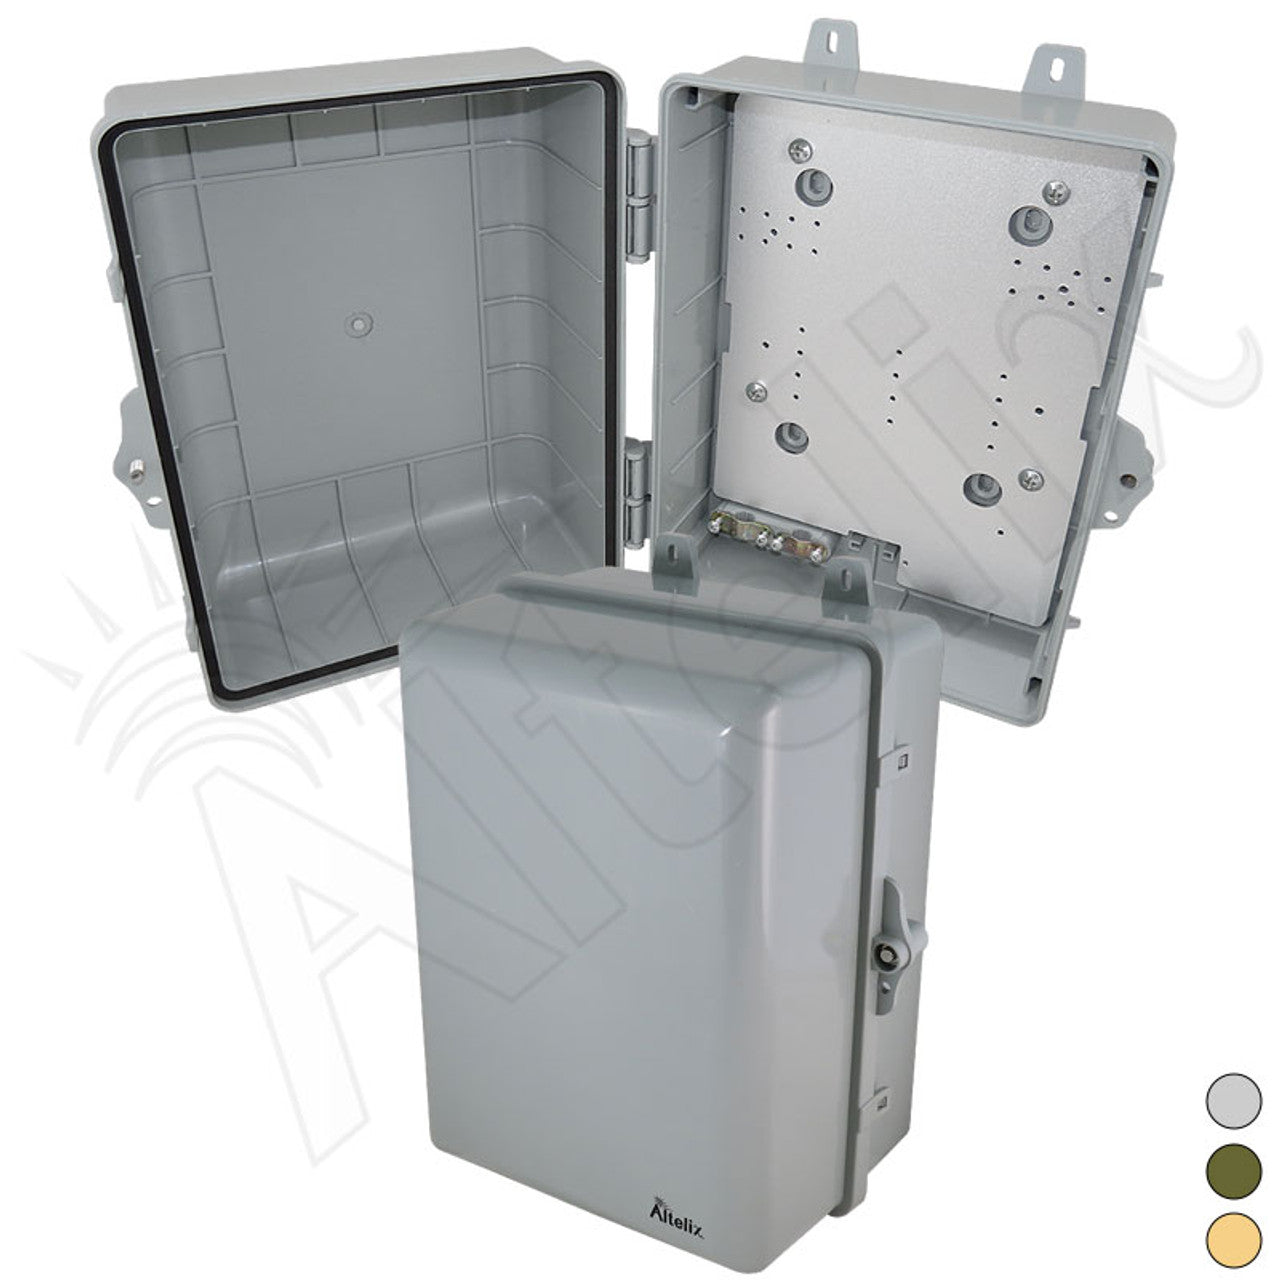 Altelix 12x9x7 IP66 NEMA 4X PC+ABS Weatherproof Utility Box with Hinged Door and Aluminum Mounting Plate